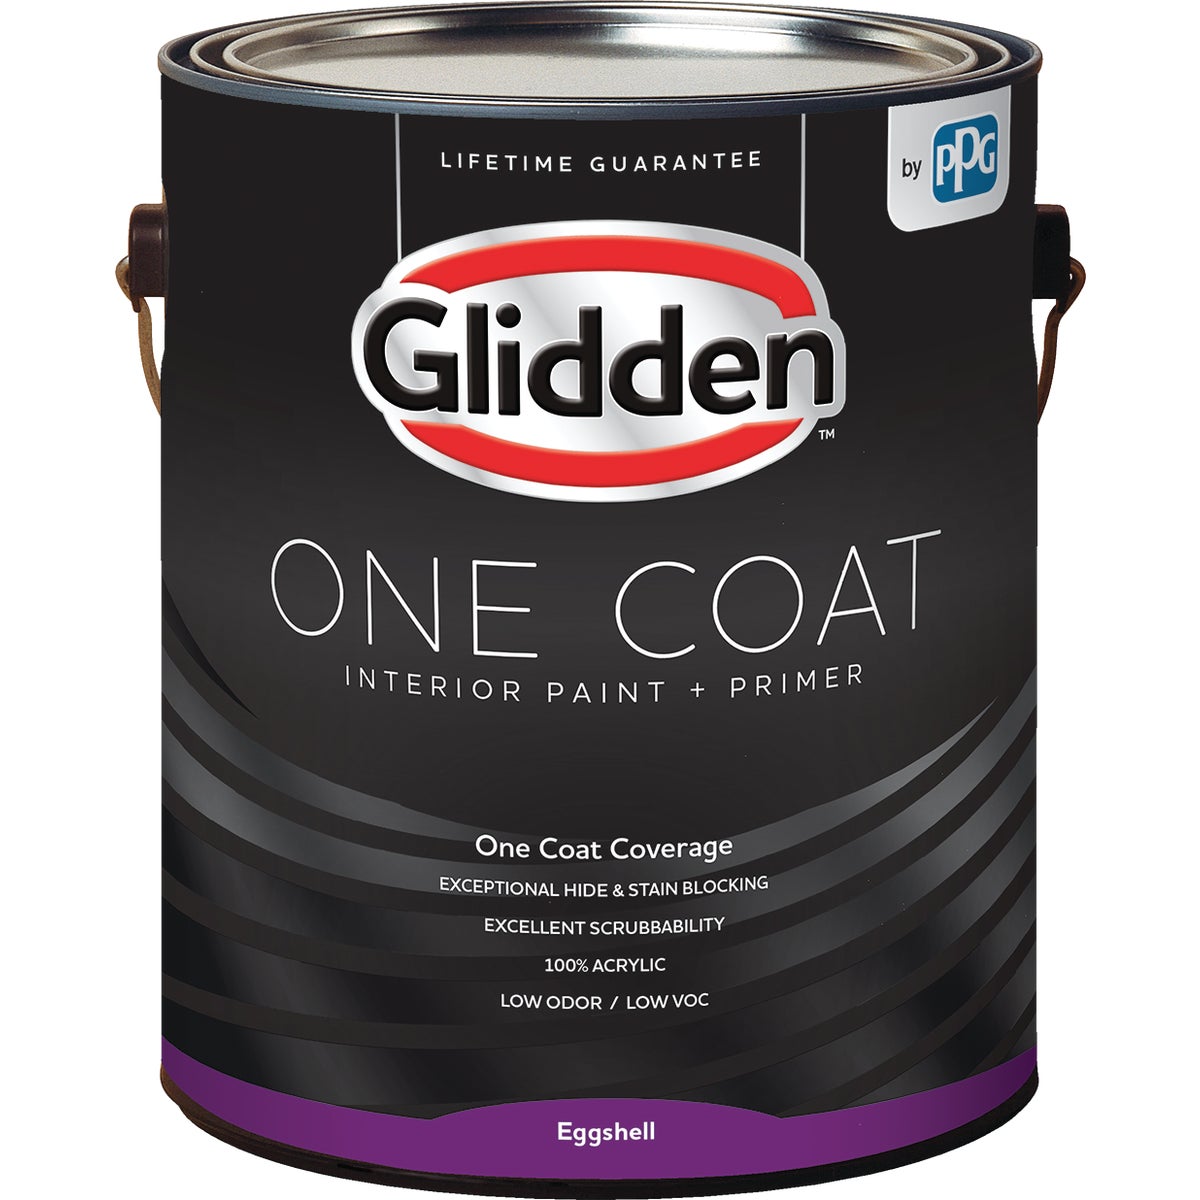 Glidden One Coat Interior Paint + Primer Eggshell Midtone Base 1 Gallon